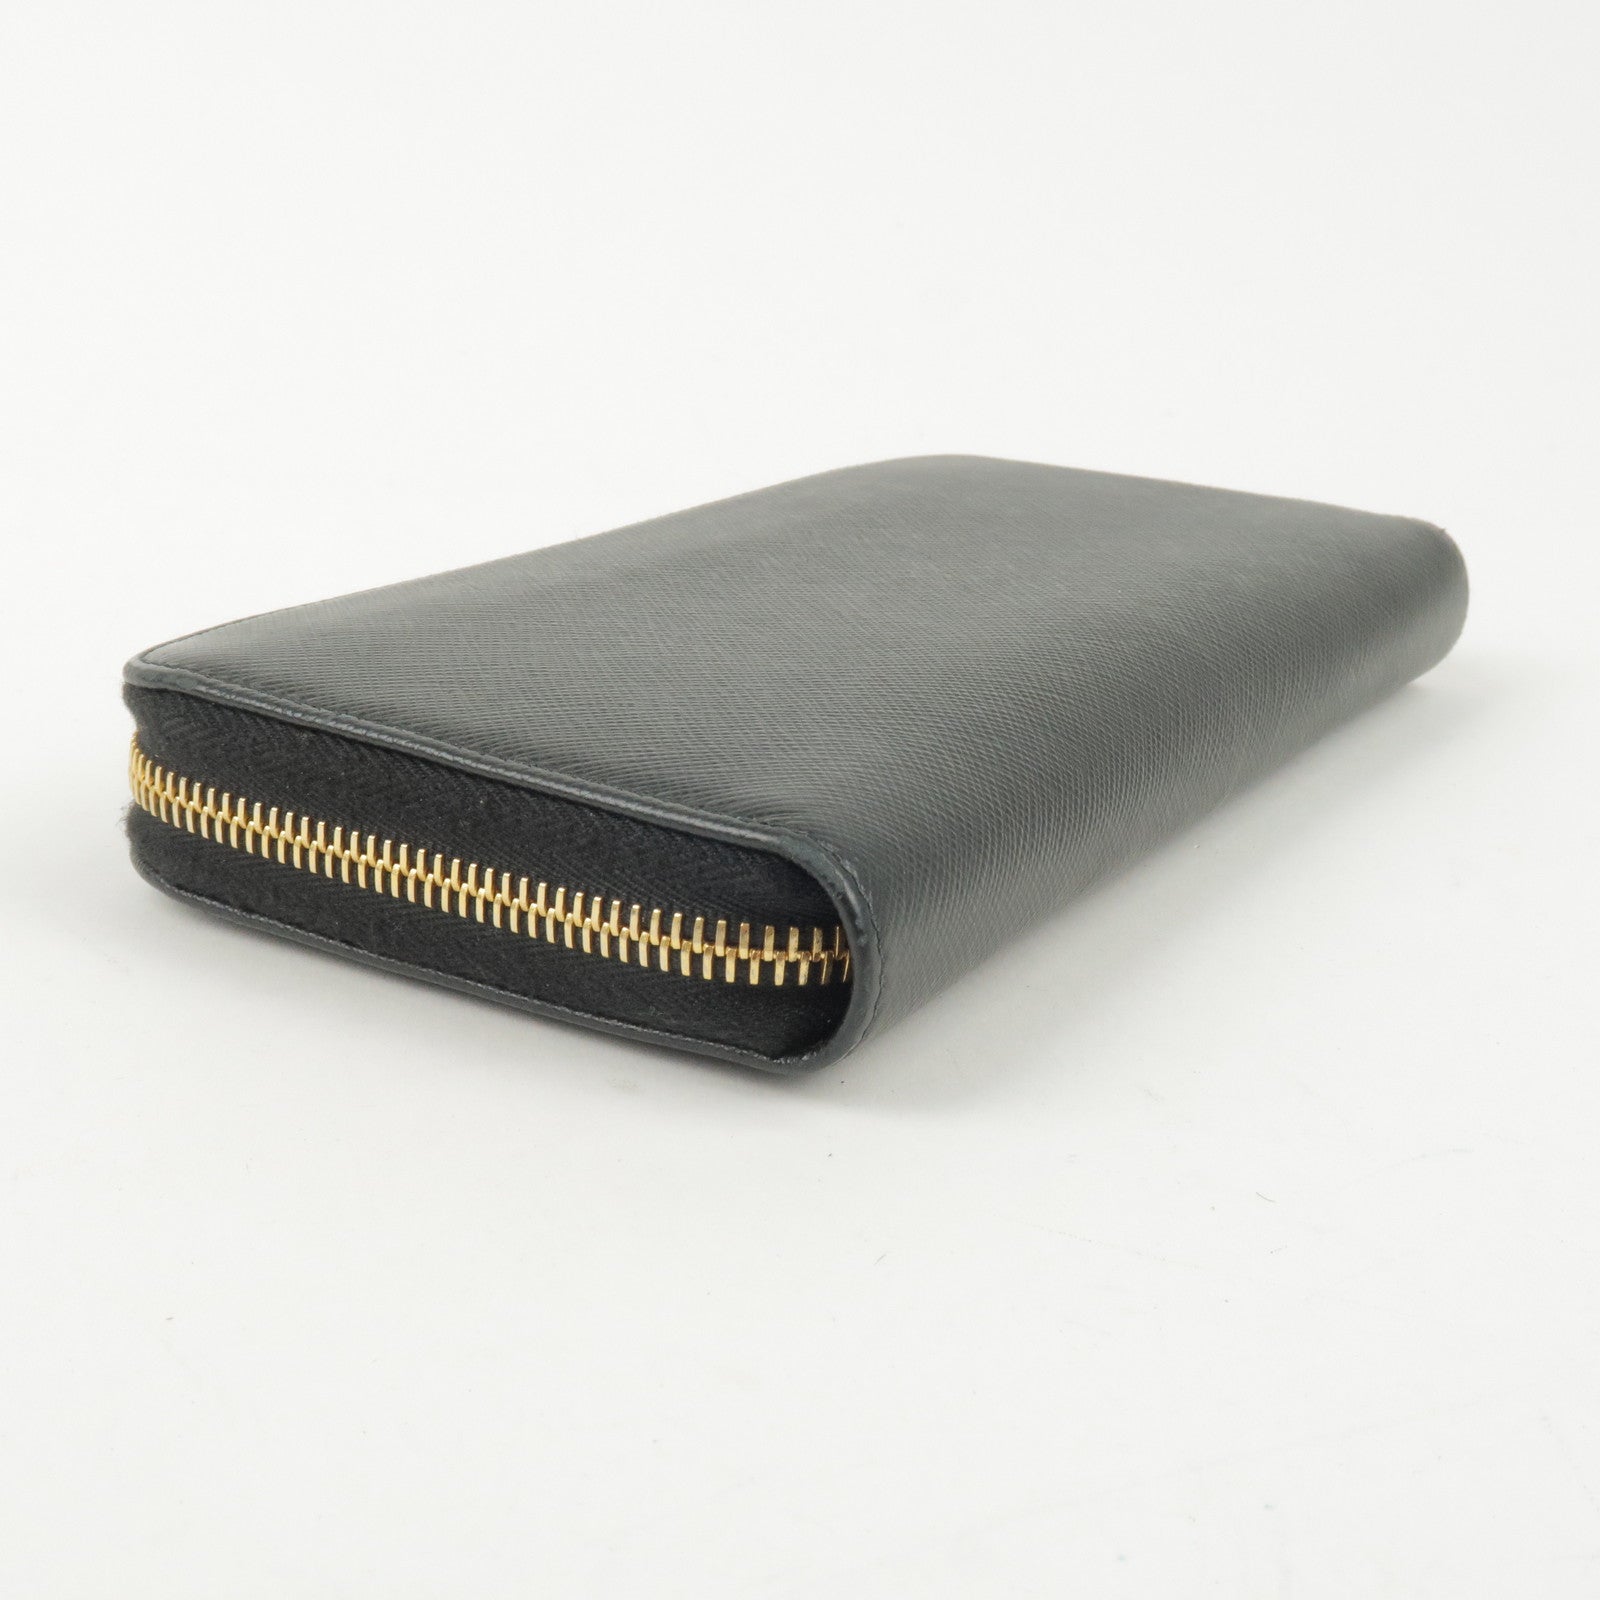 PRADA BLACK Saffiano Leather WALLET Zip Around Authentic! Missing zipper  pull!